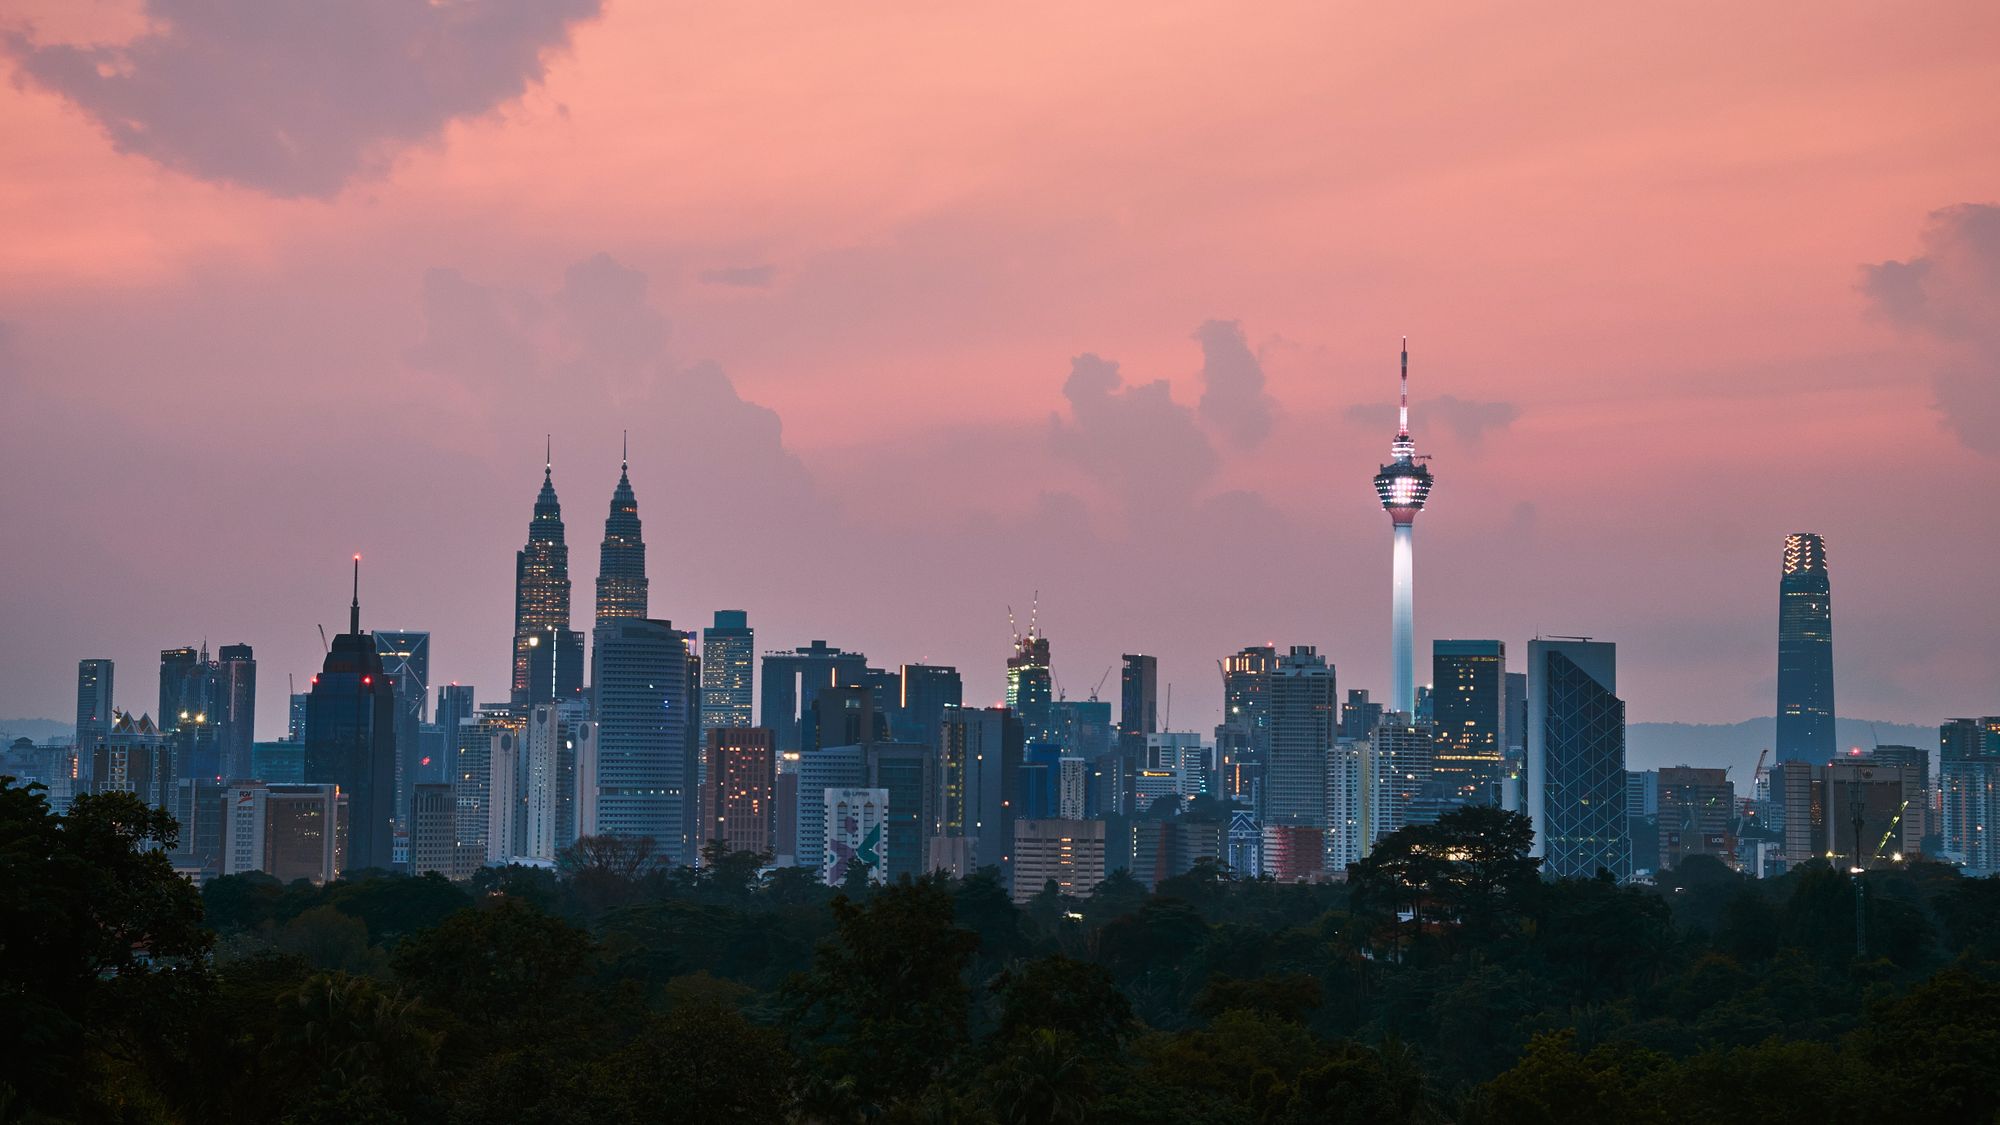 The skyline of Kuala Lumpur, Malaysia